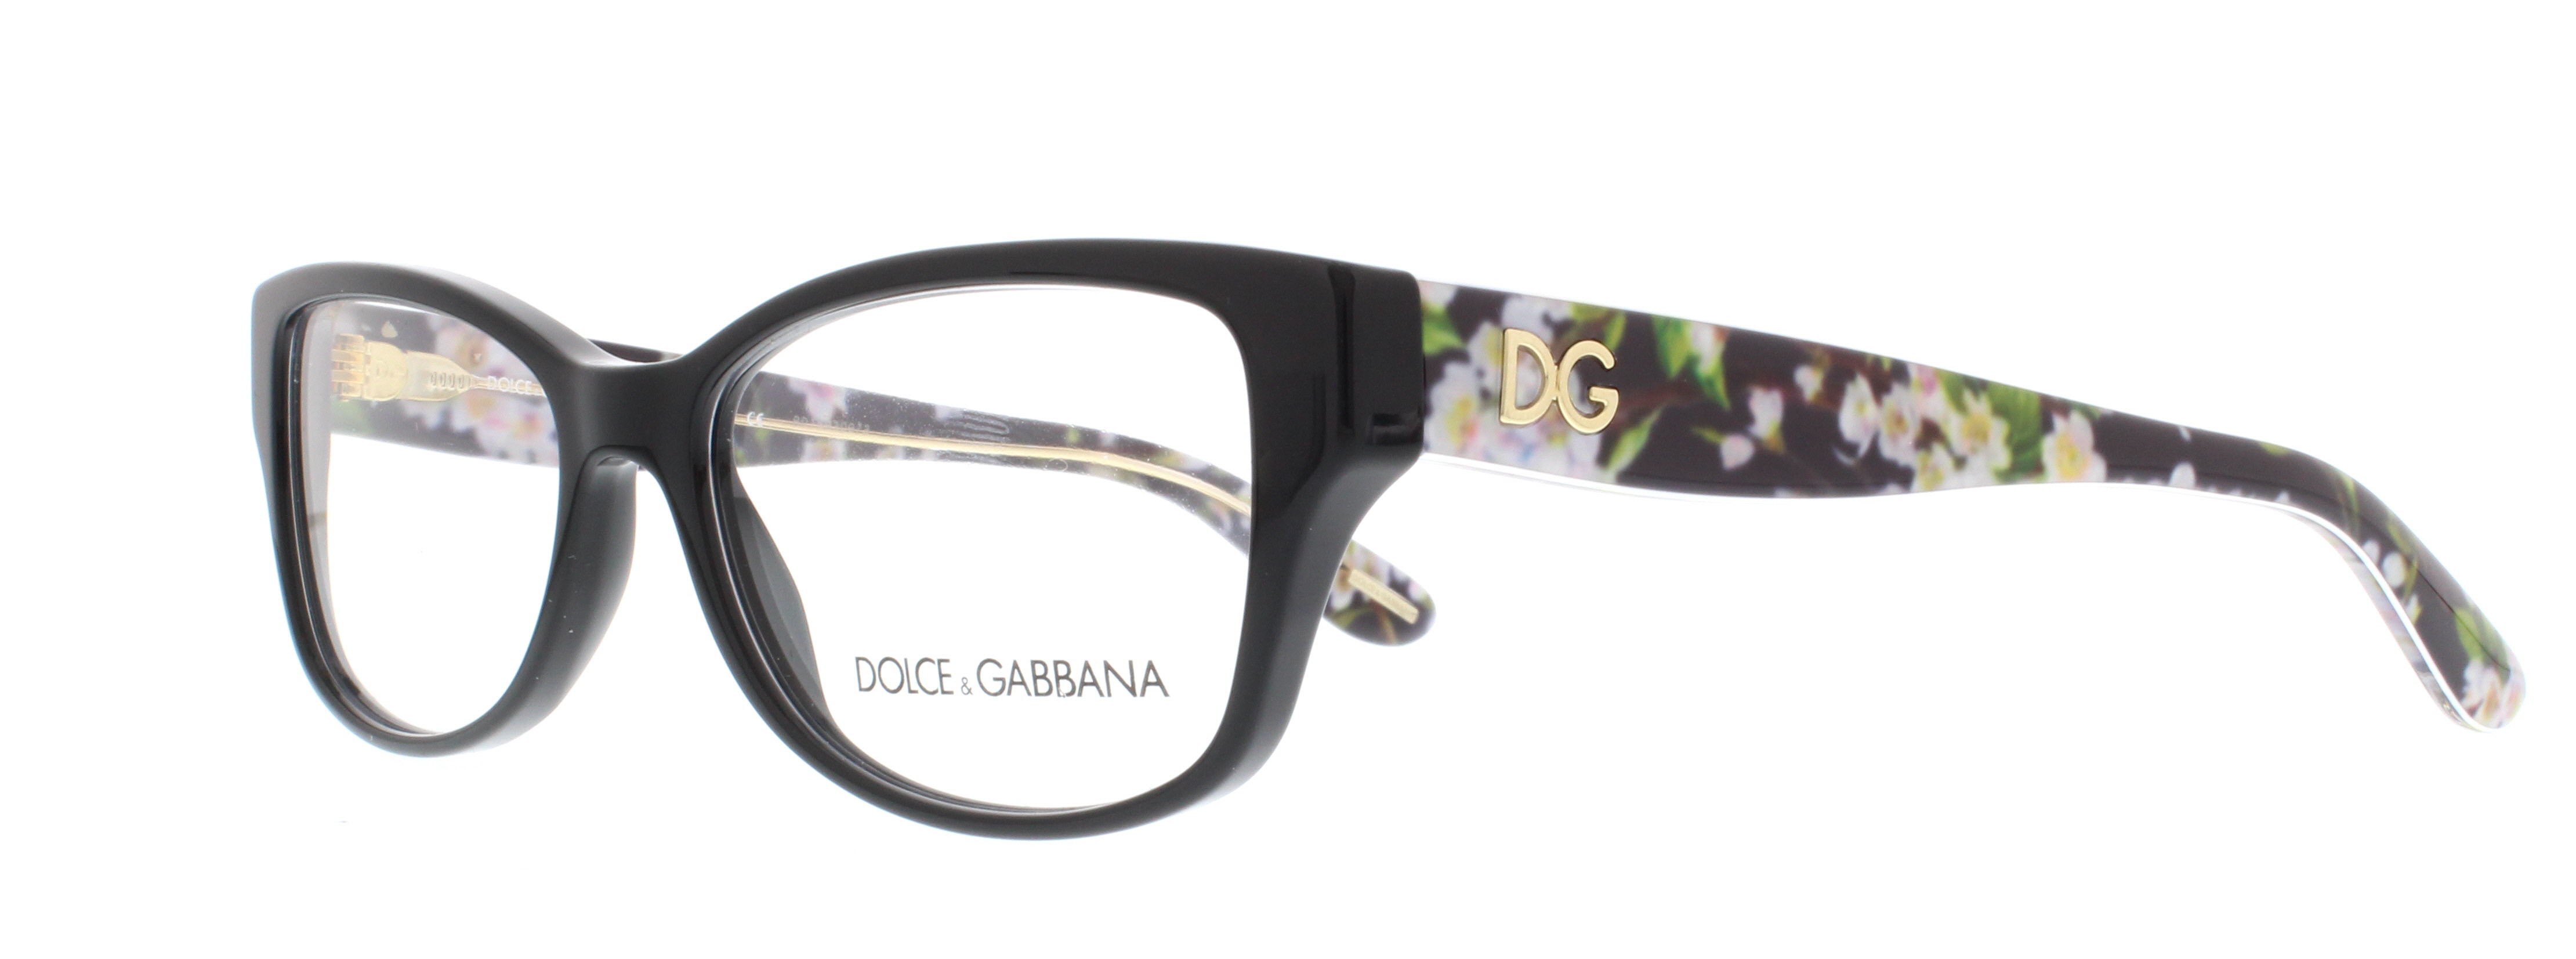 Picture of Dolce & Gabbana Eyeglasses DG3204